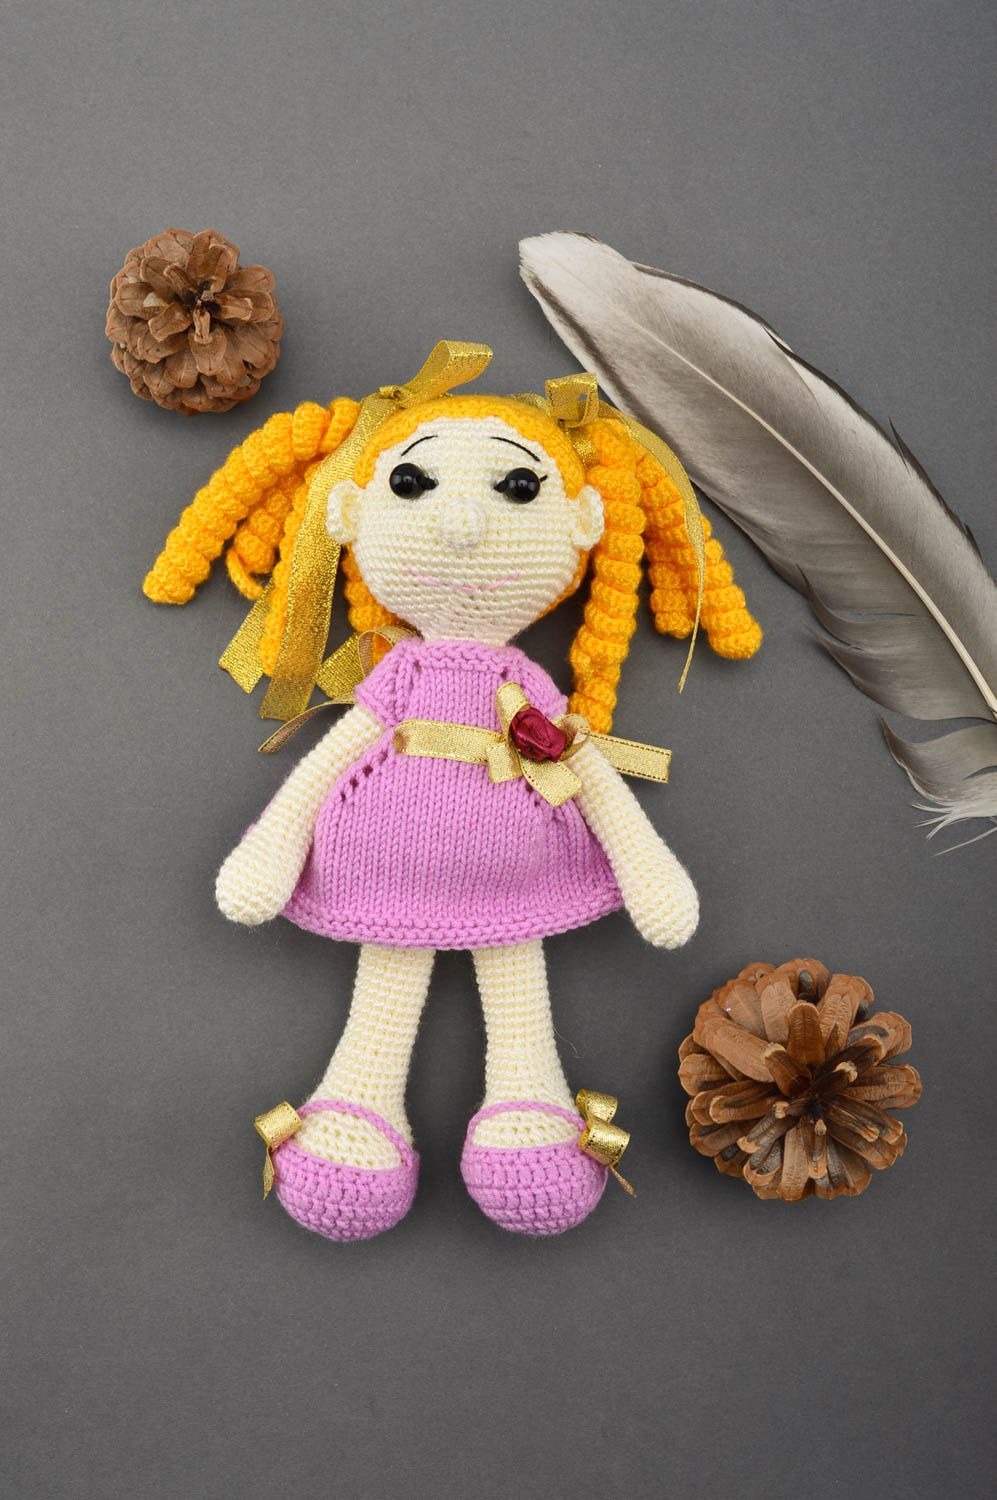 Handmade crochet doll designer doll unusual gift for baby nursery decor photo 1